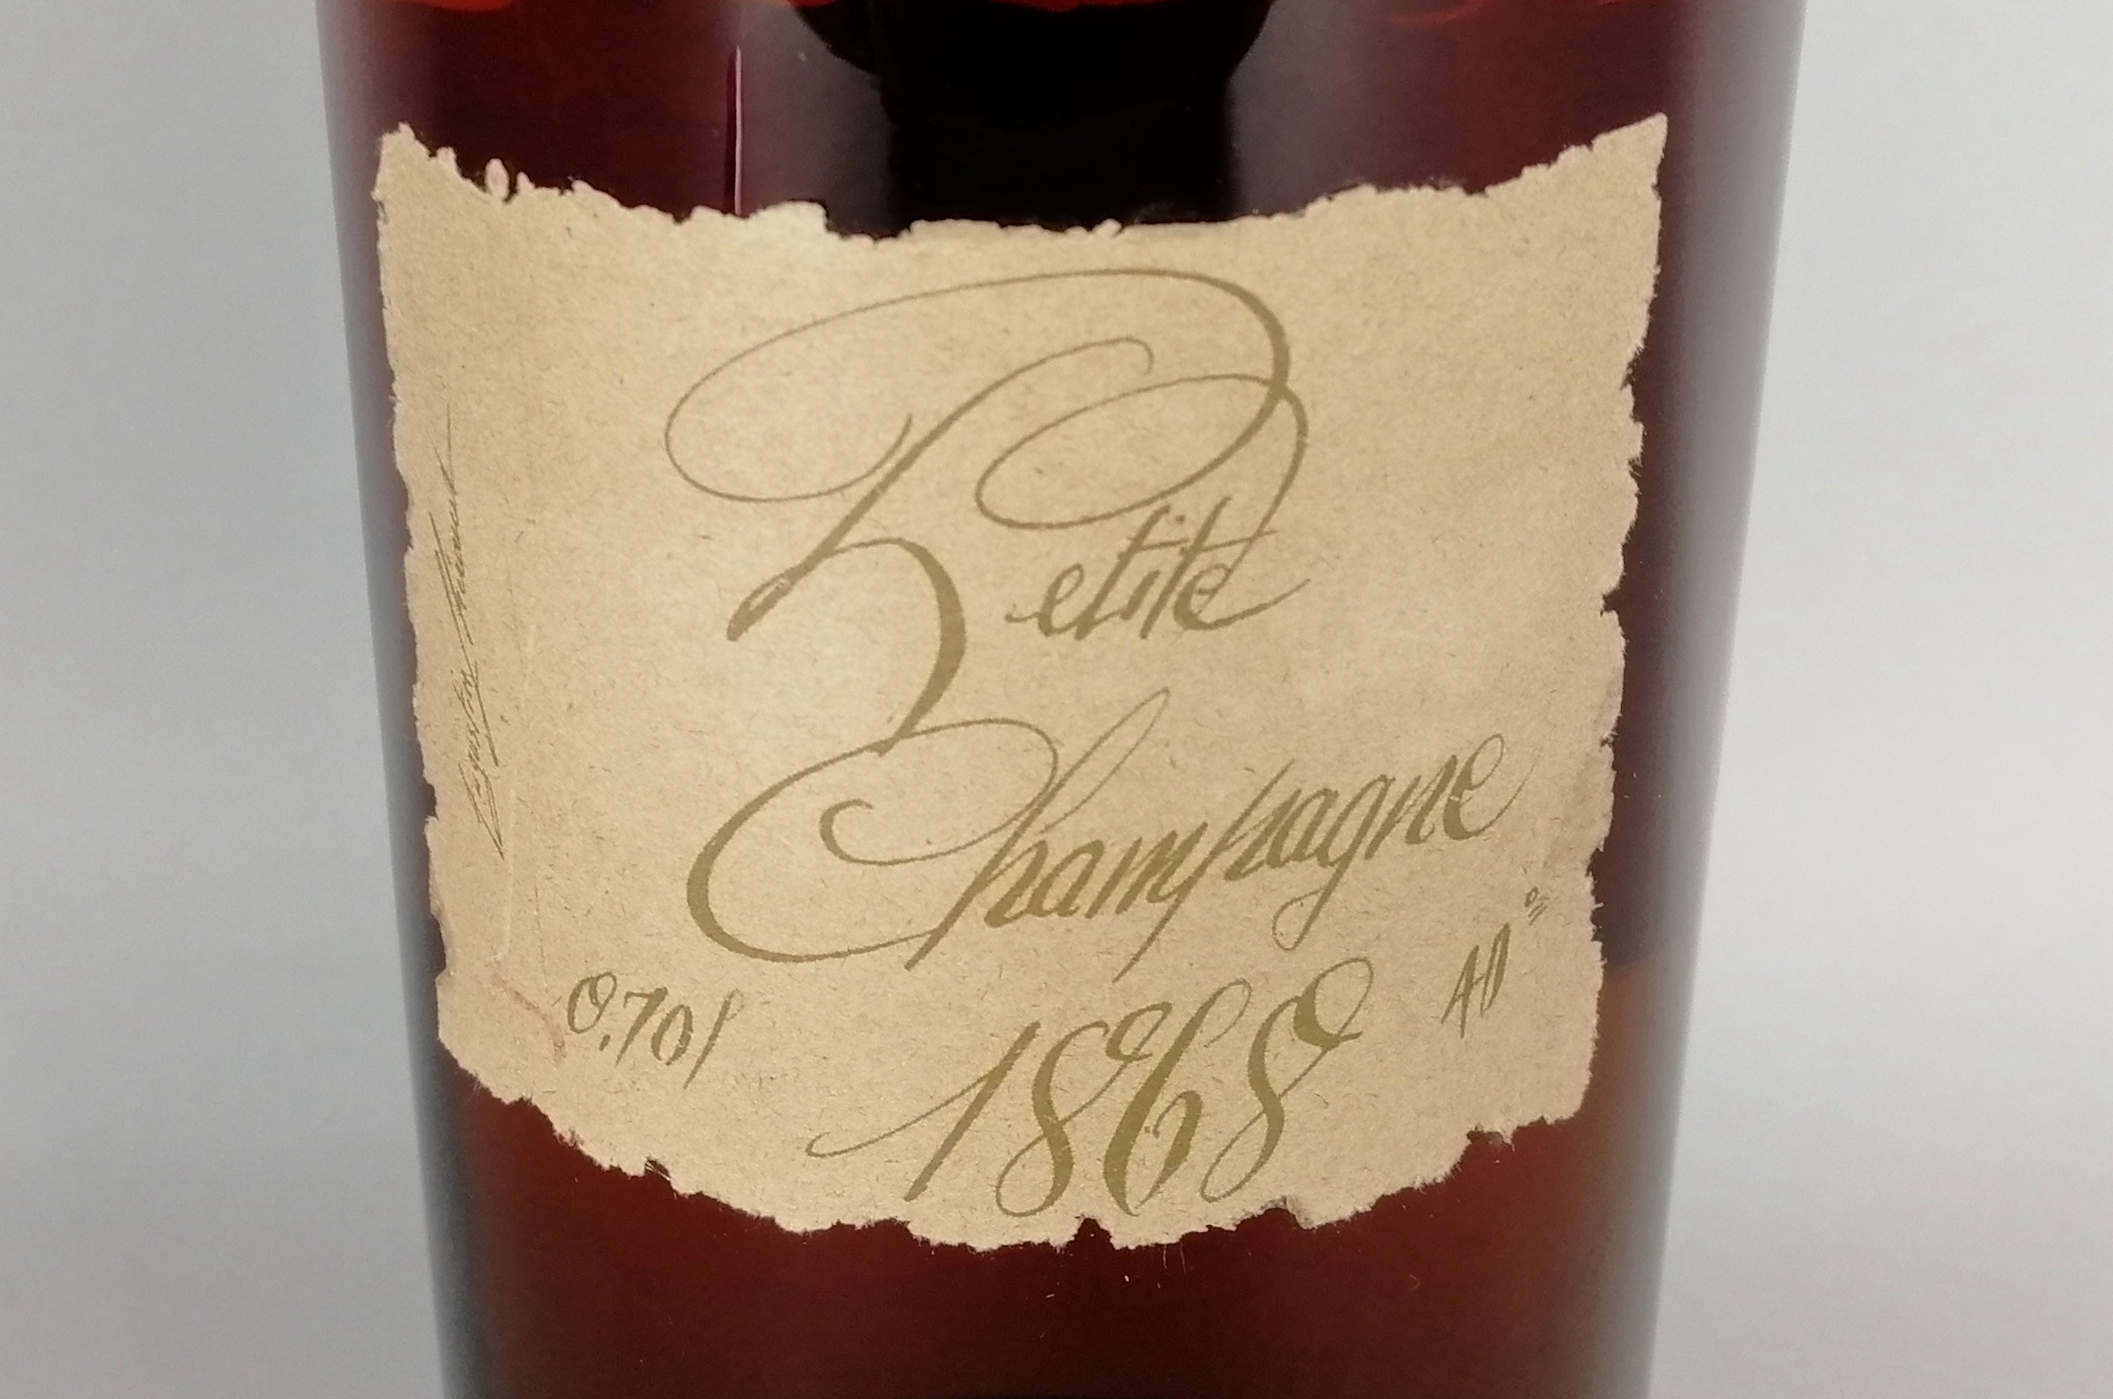 Cognac CHARLES LHERAUD - Domaine de Lasdoux, Petite Champagne, Vintage 1868. Imbottigliamento - Image 2 of 5